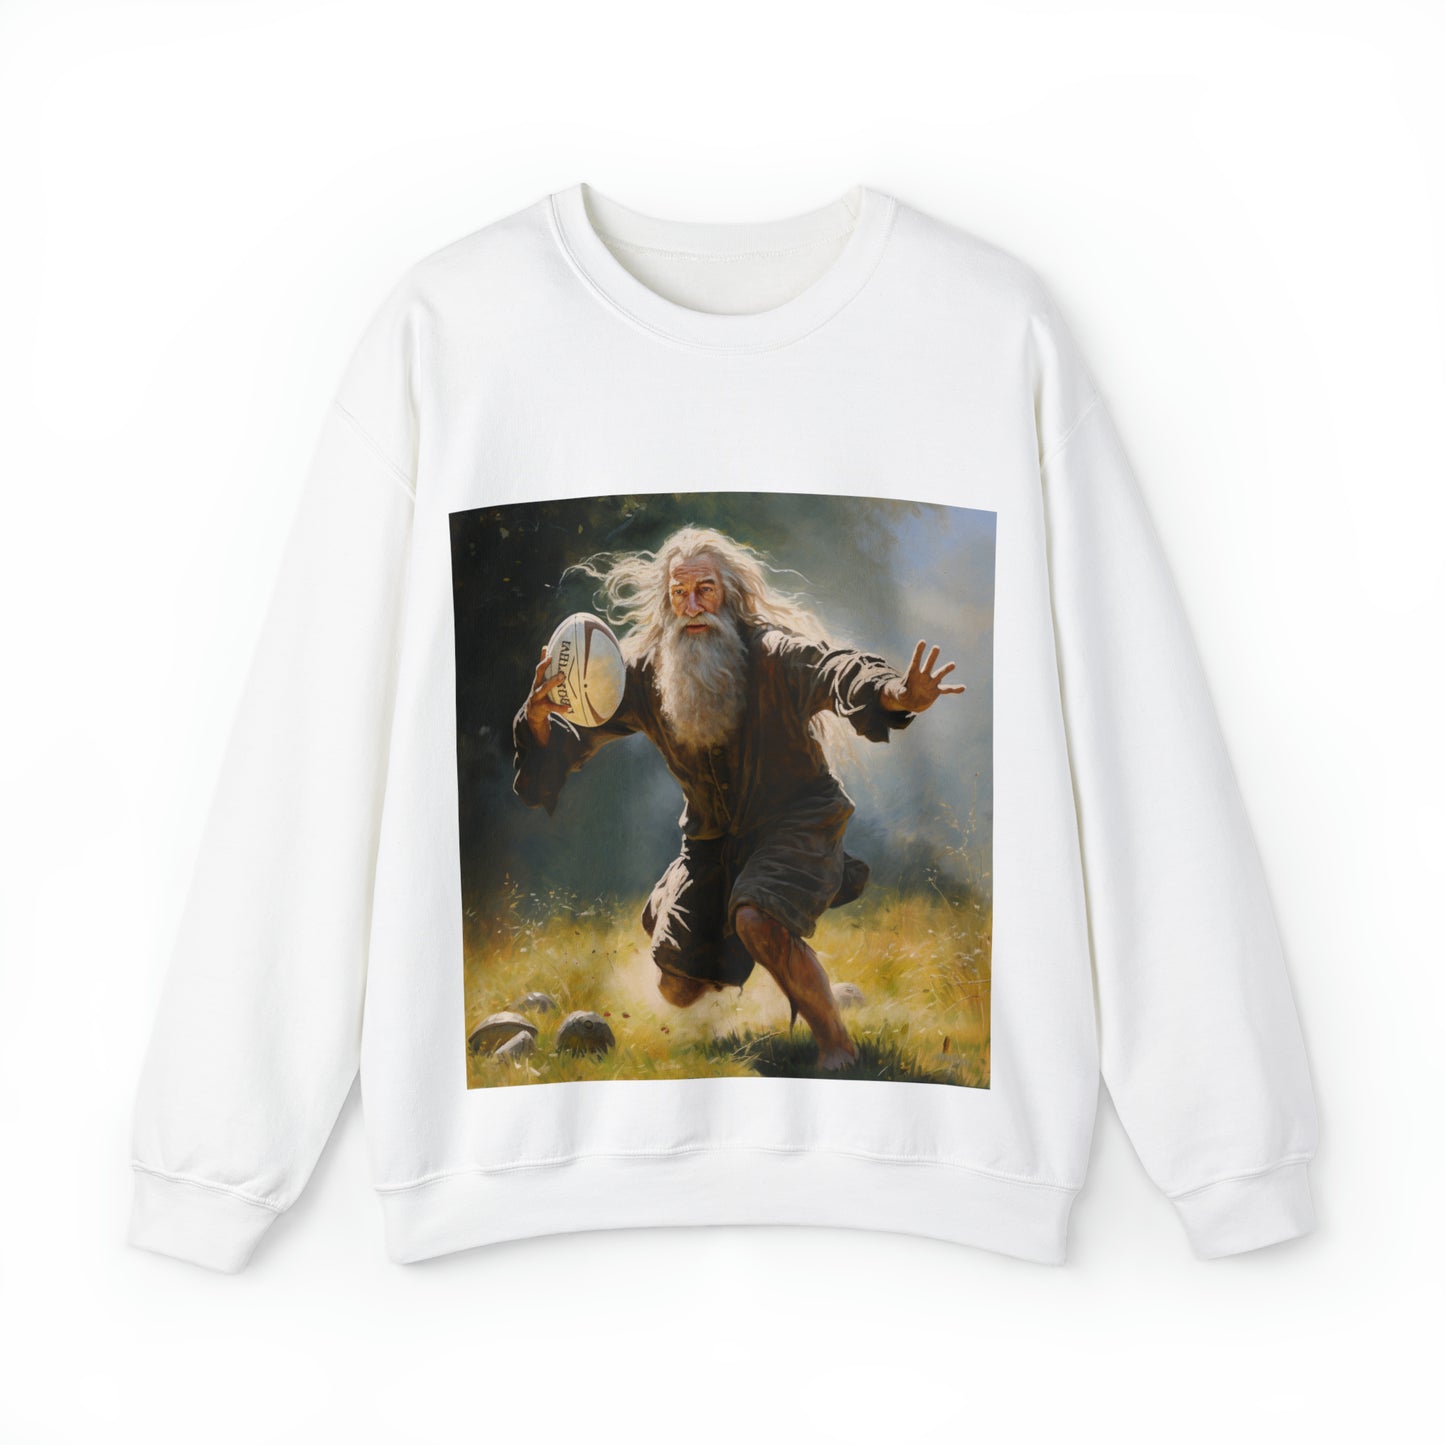 Rugby Gandalf - light sweatshirts